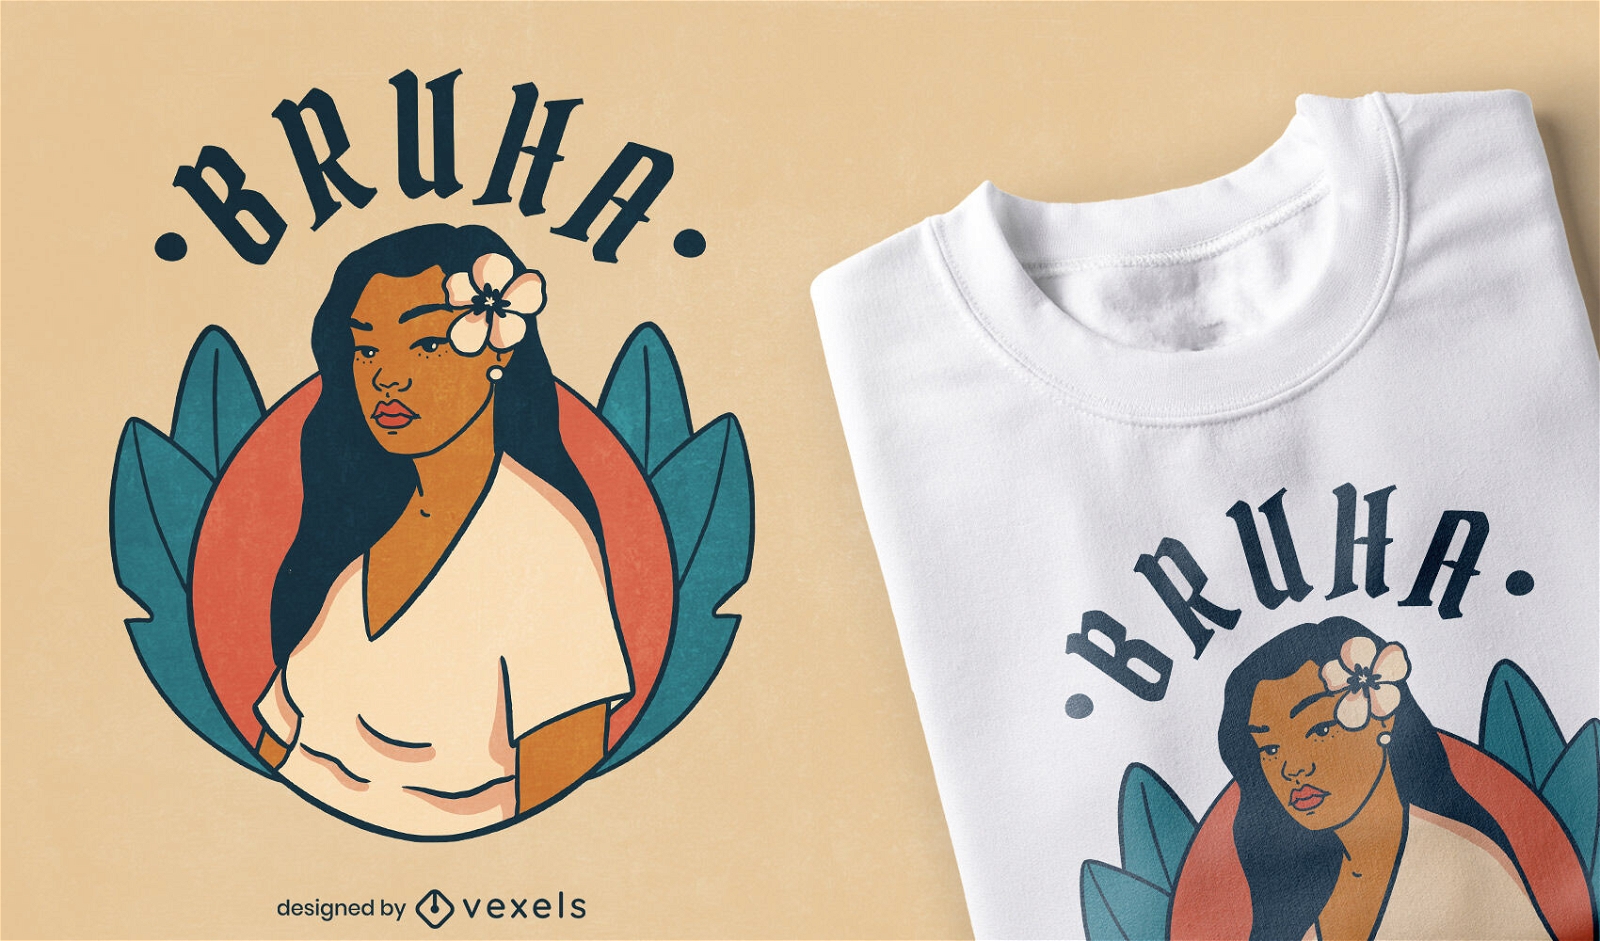 Bruha philippinisches Frauen-T-Shirt-Design